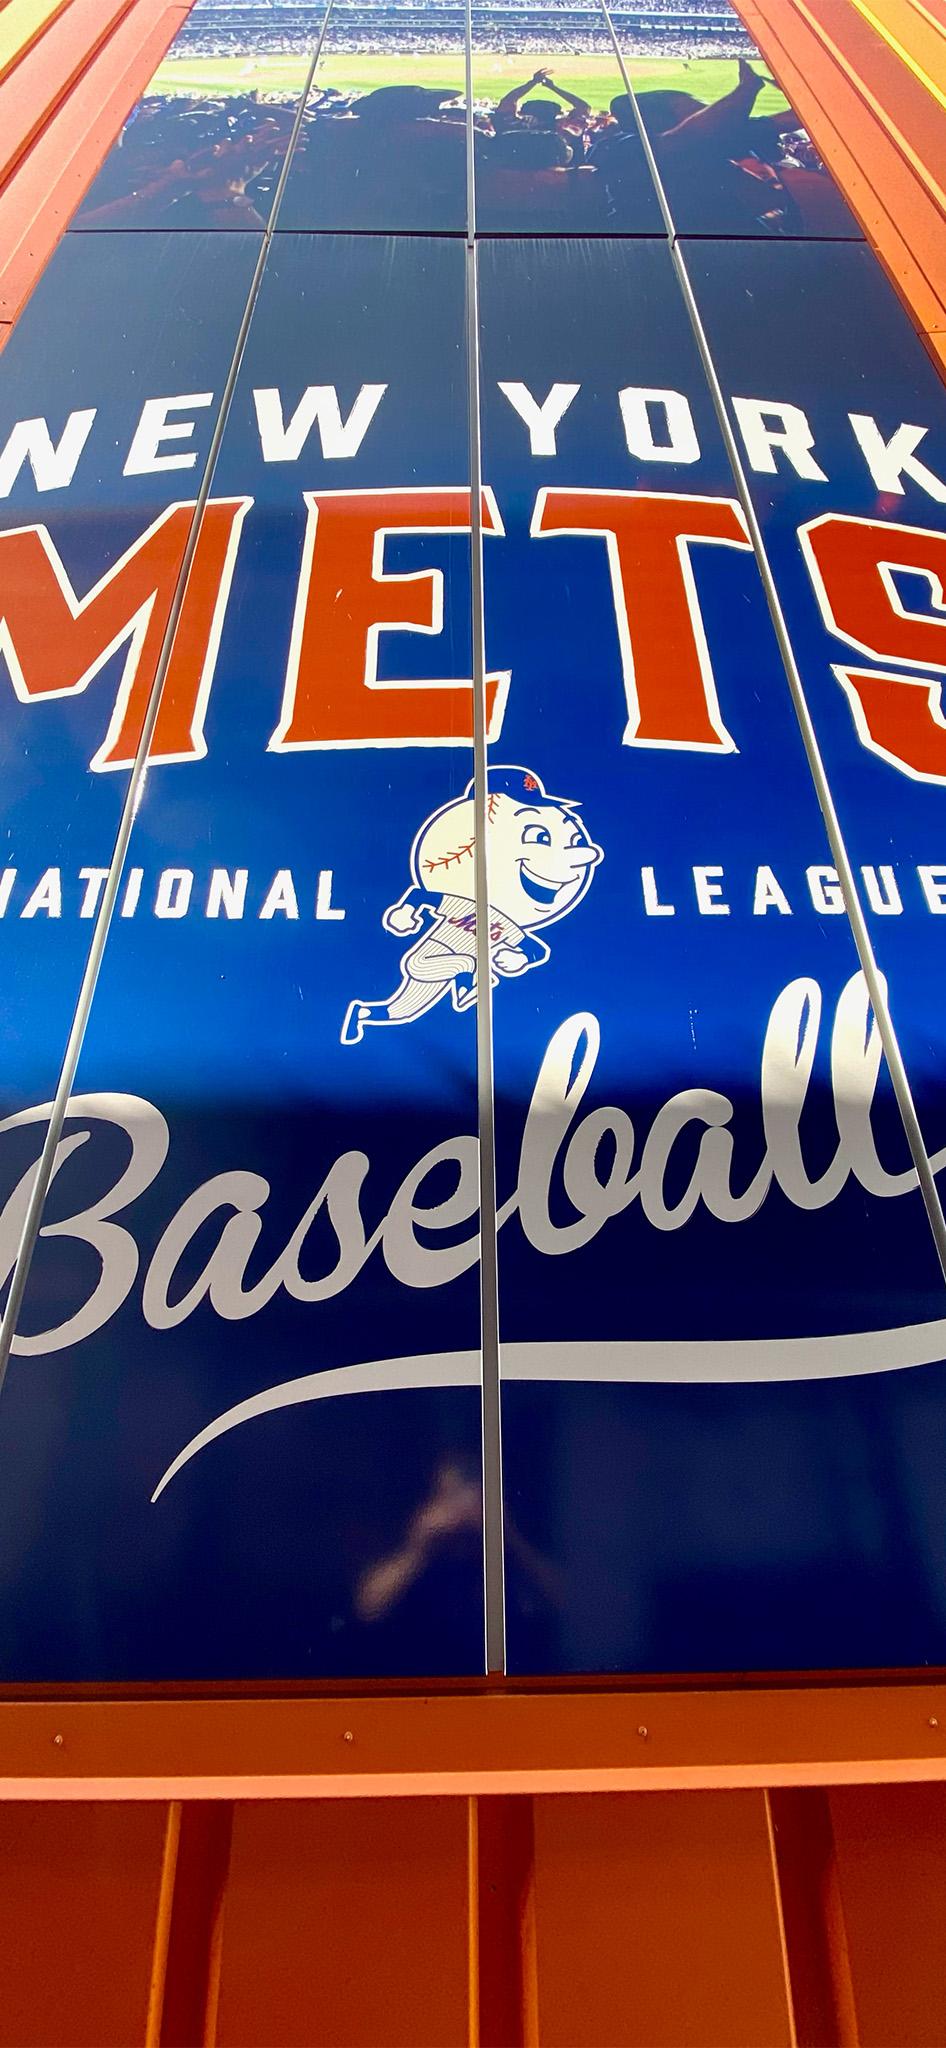 NEW YORK METS baseball mlb (2) wallpaper, 1600x1200, 232311